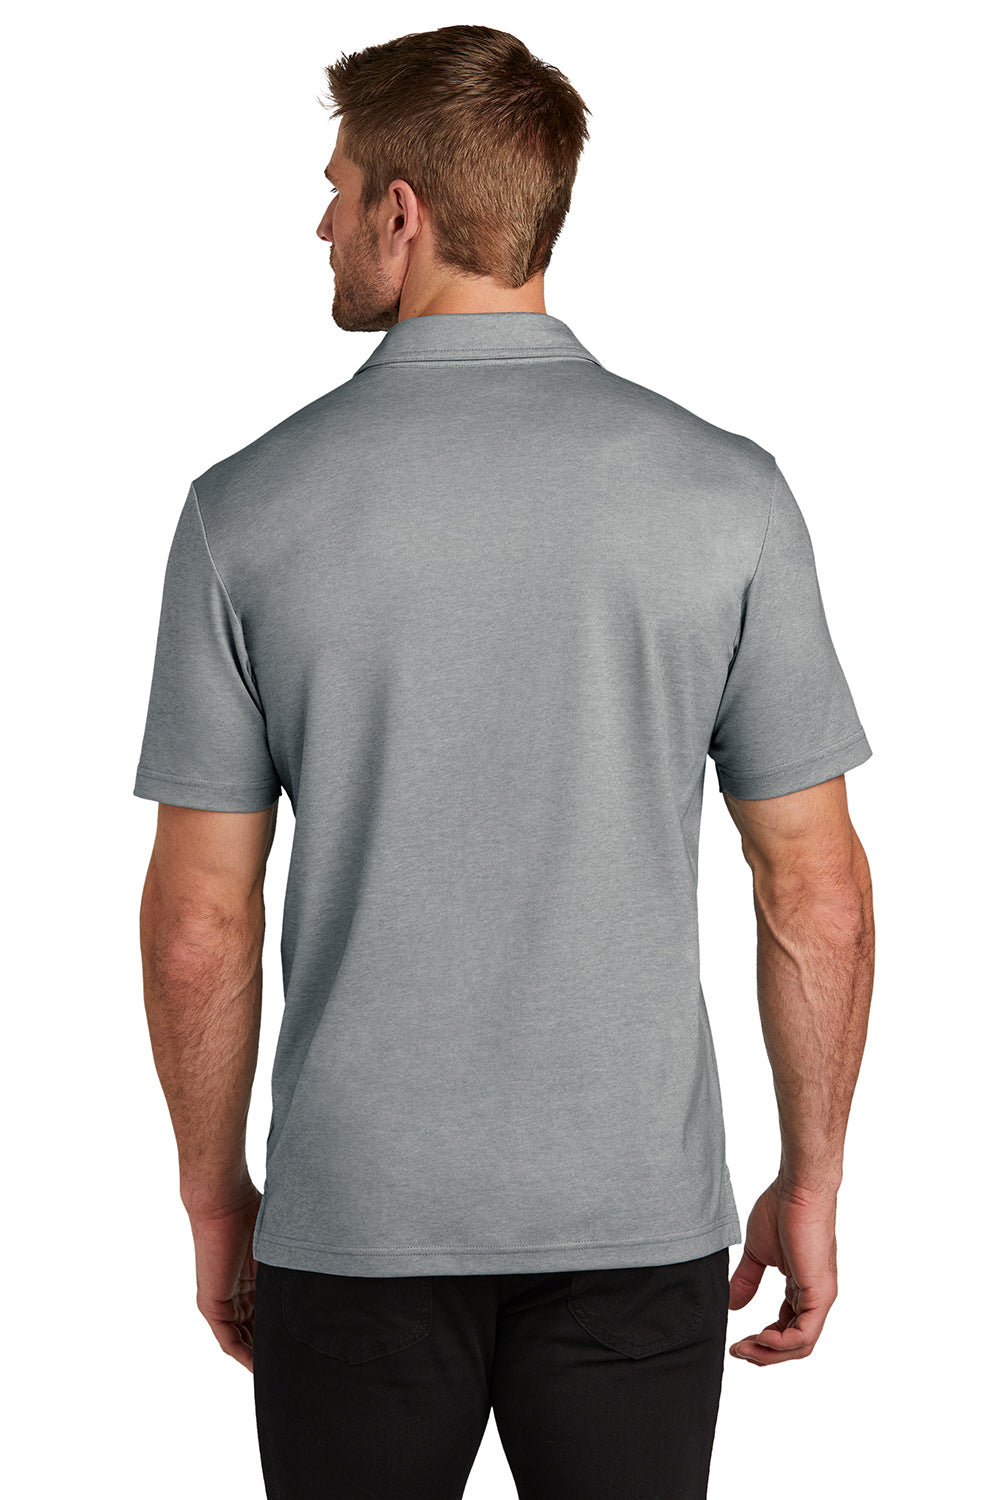 TravisMathew TM1MZ344 Mens Sunsetters Moisture Wicking Short Sleeve Polo Shirt w/ Pocket Heather Grey Model Back